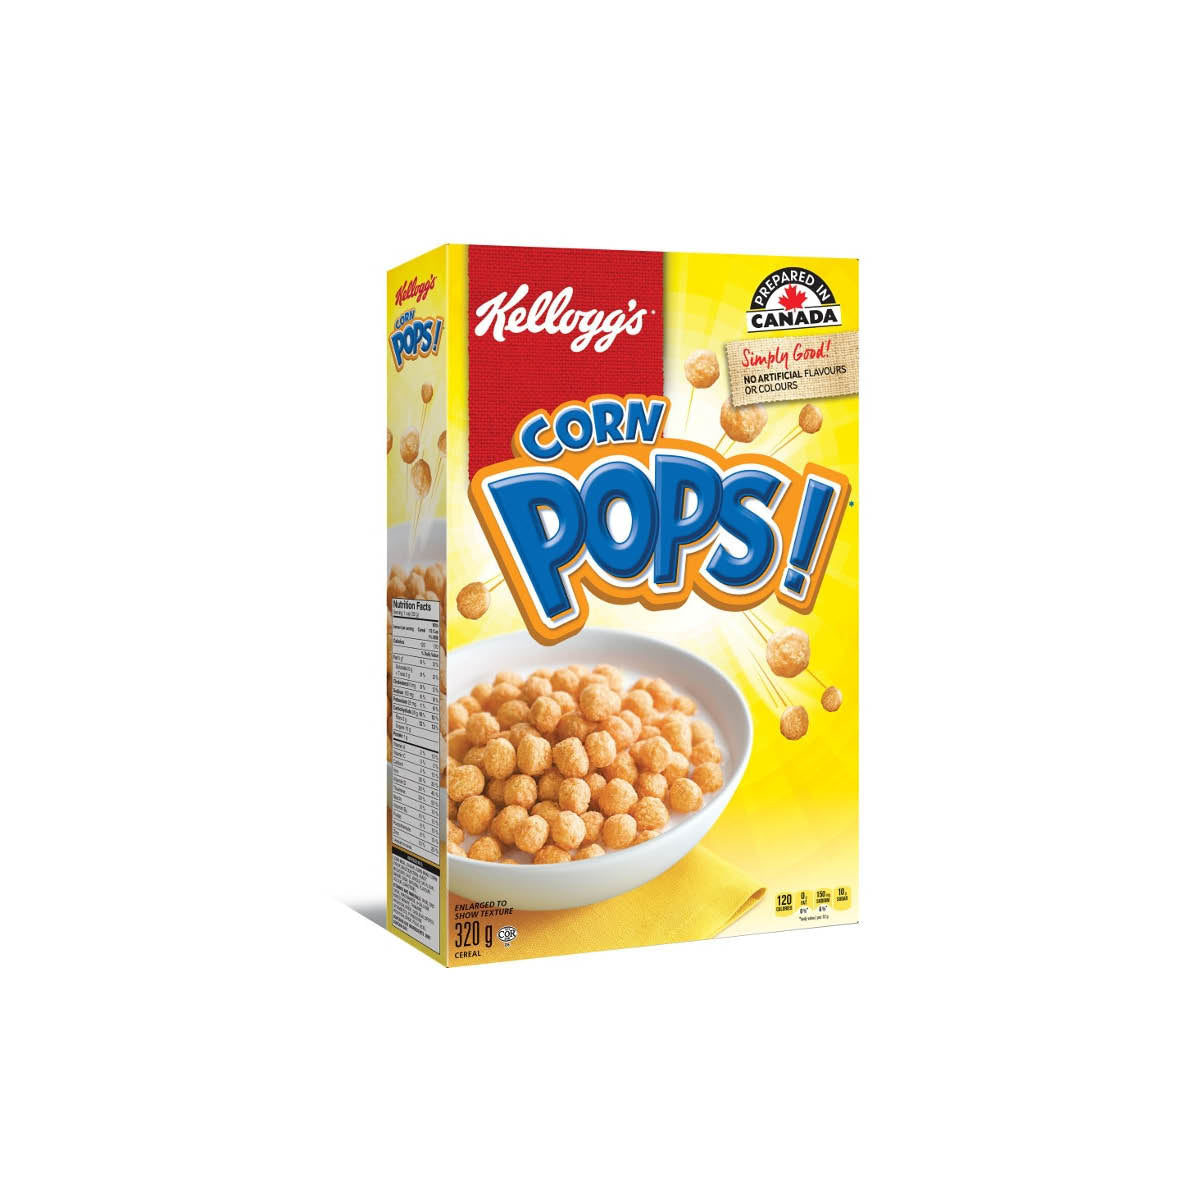 Kellogg's Corn Pops Cereal, 320g